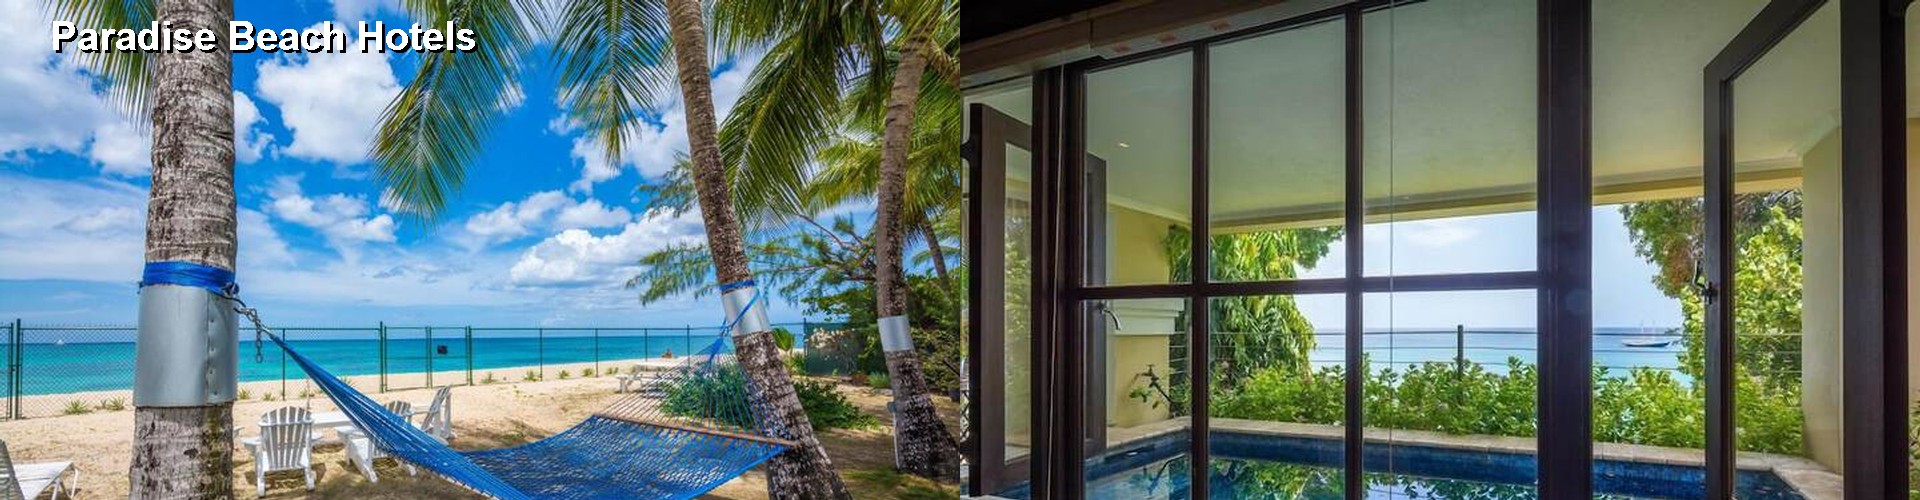 3 Best Hotels near Paradise Beach